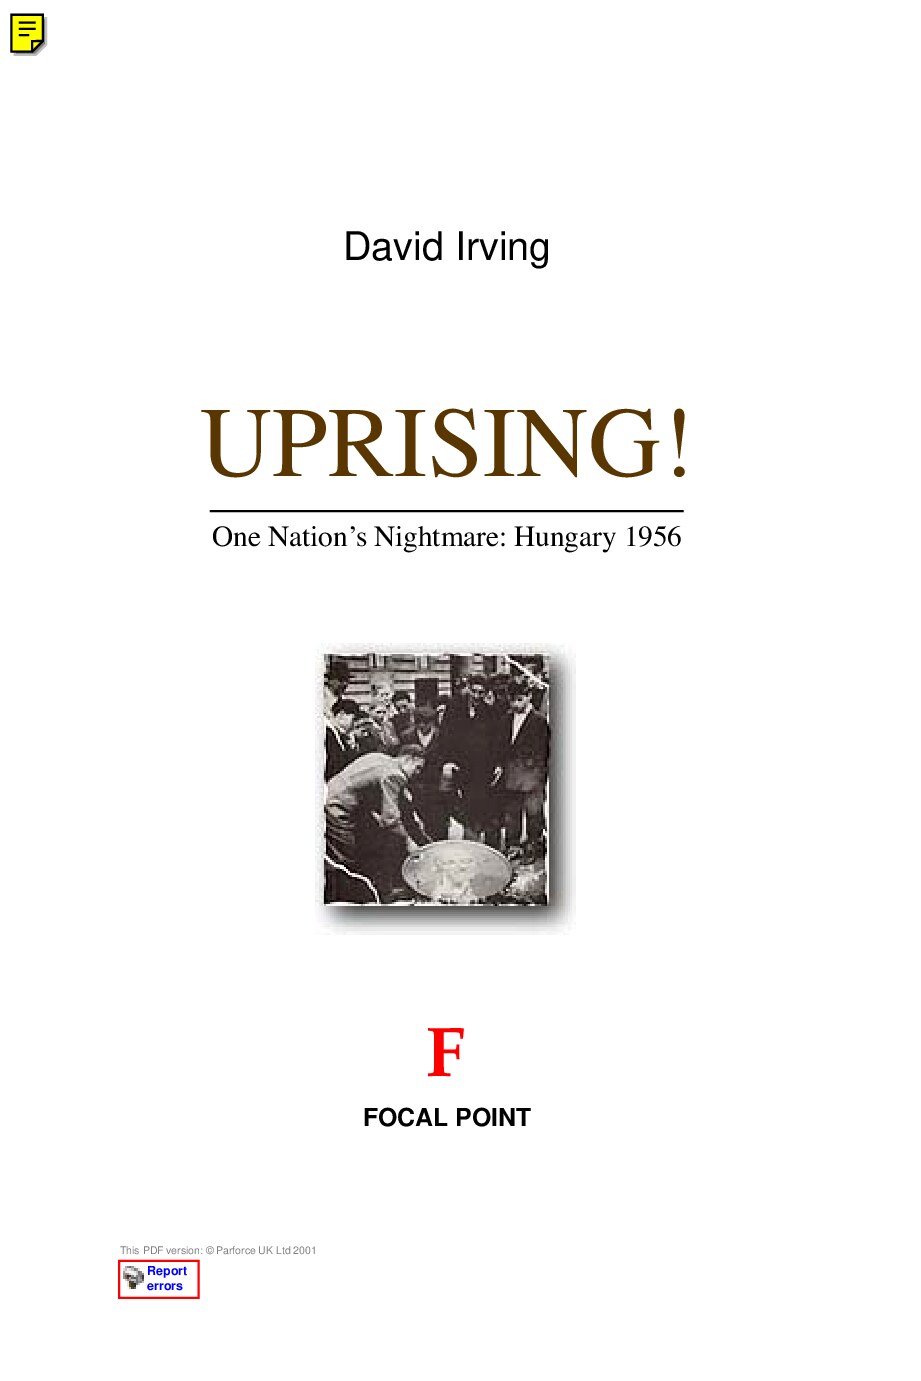 “Uprising!”